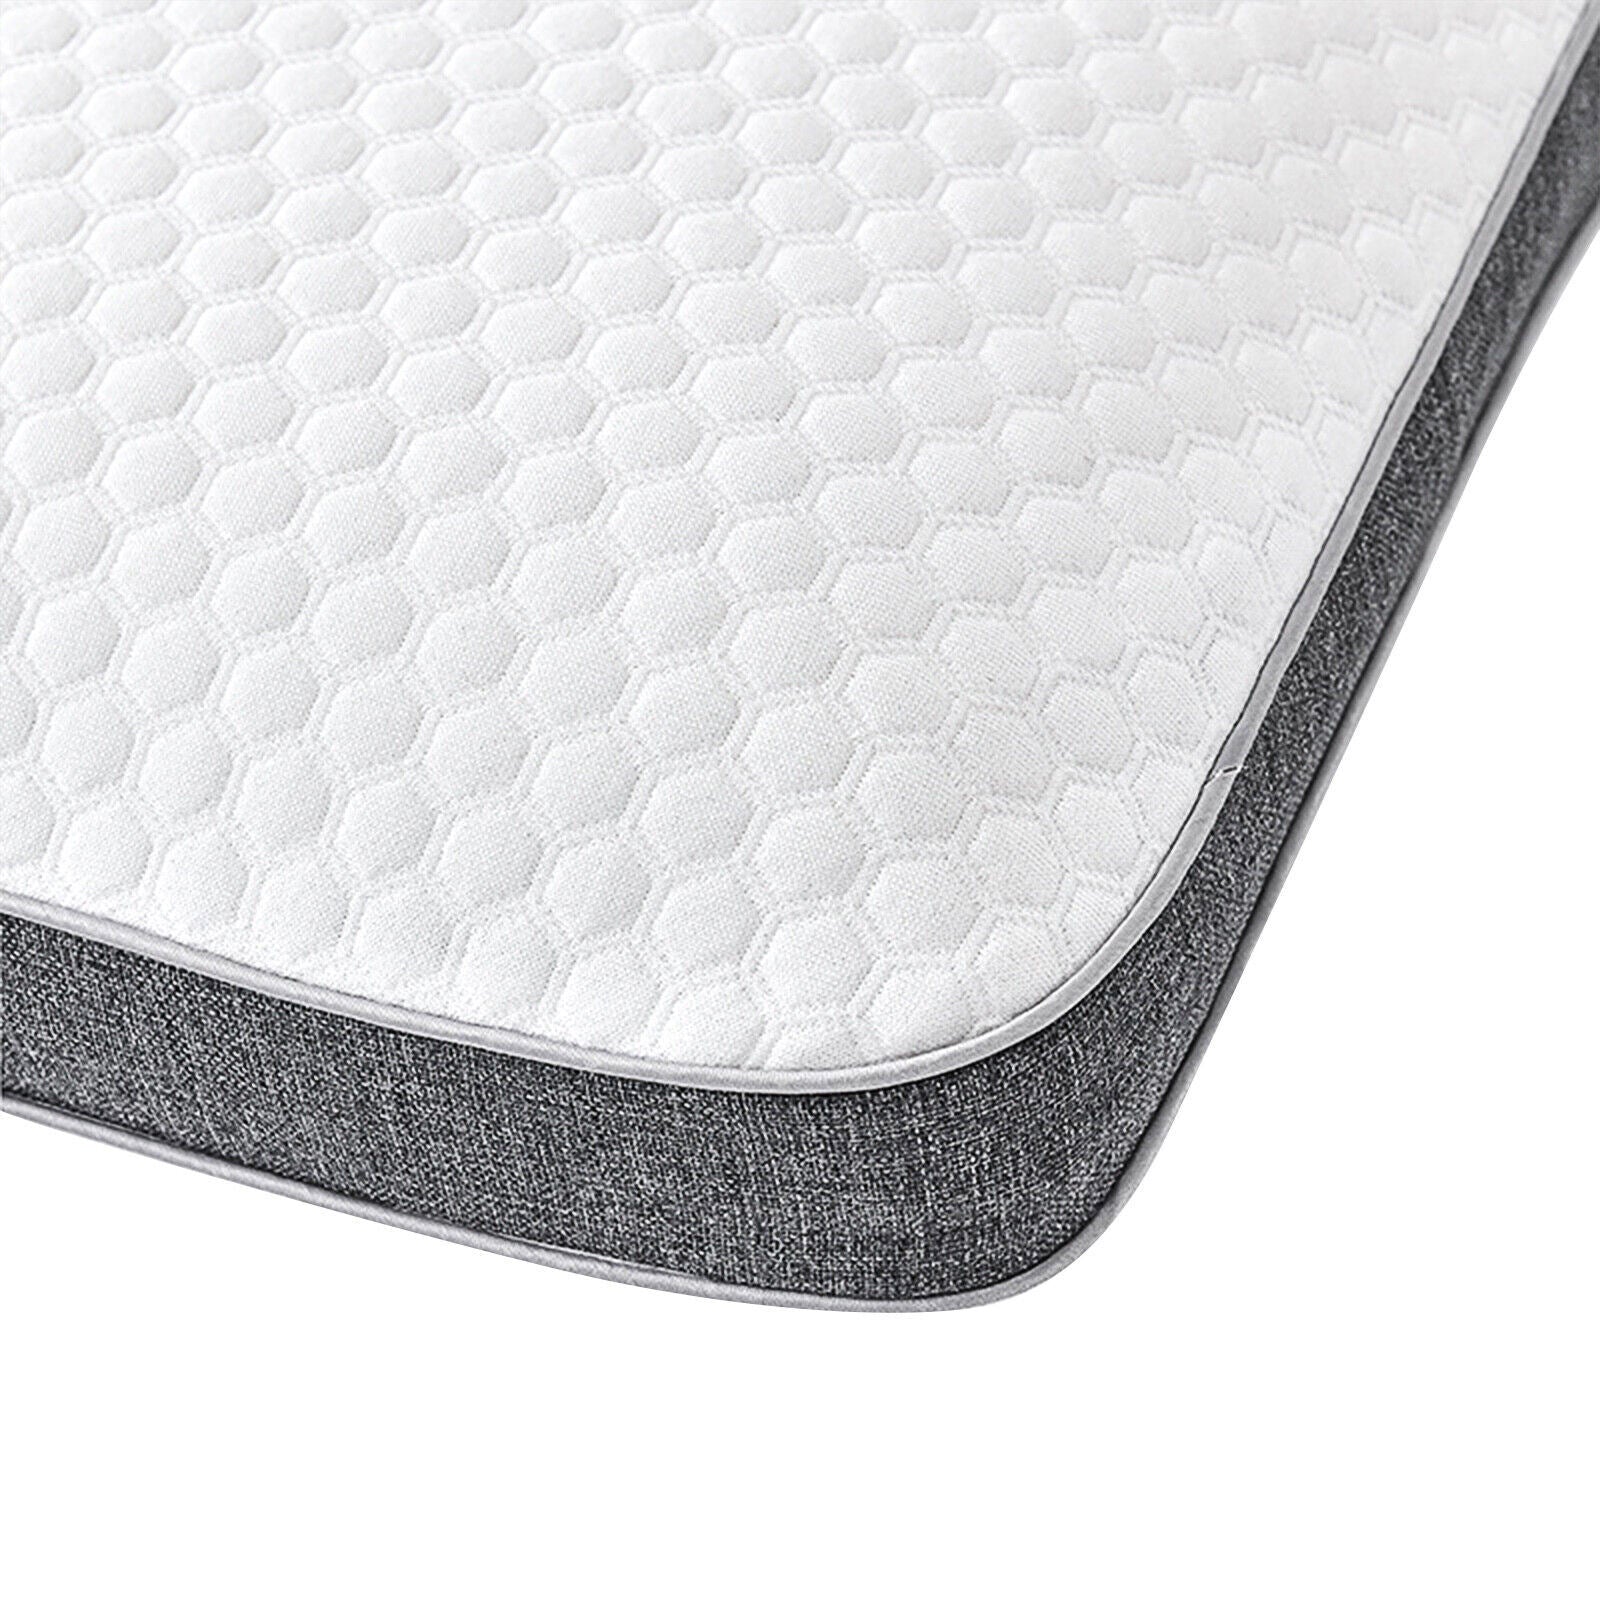 Orthopedic Neck Support Memory Foam Bed Pillow - promeedsilk